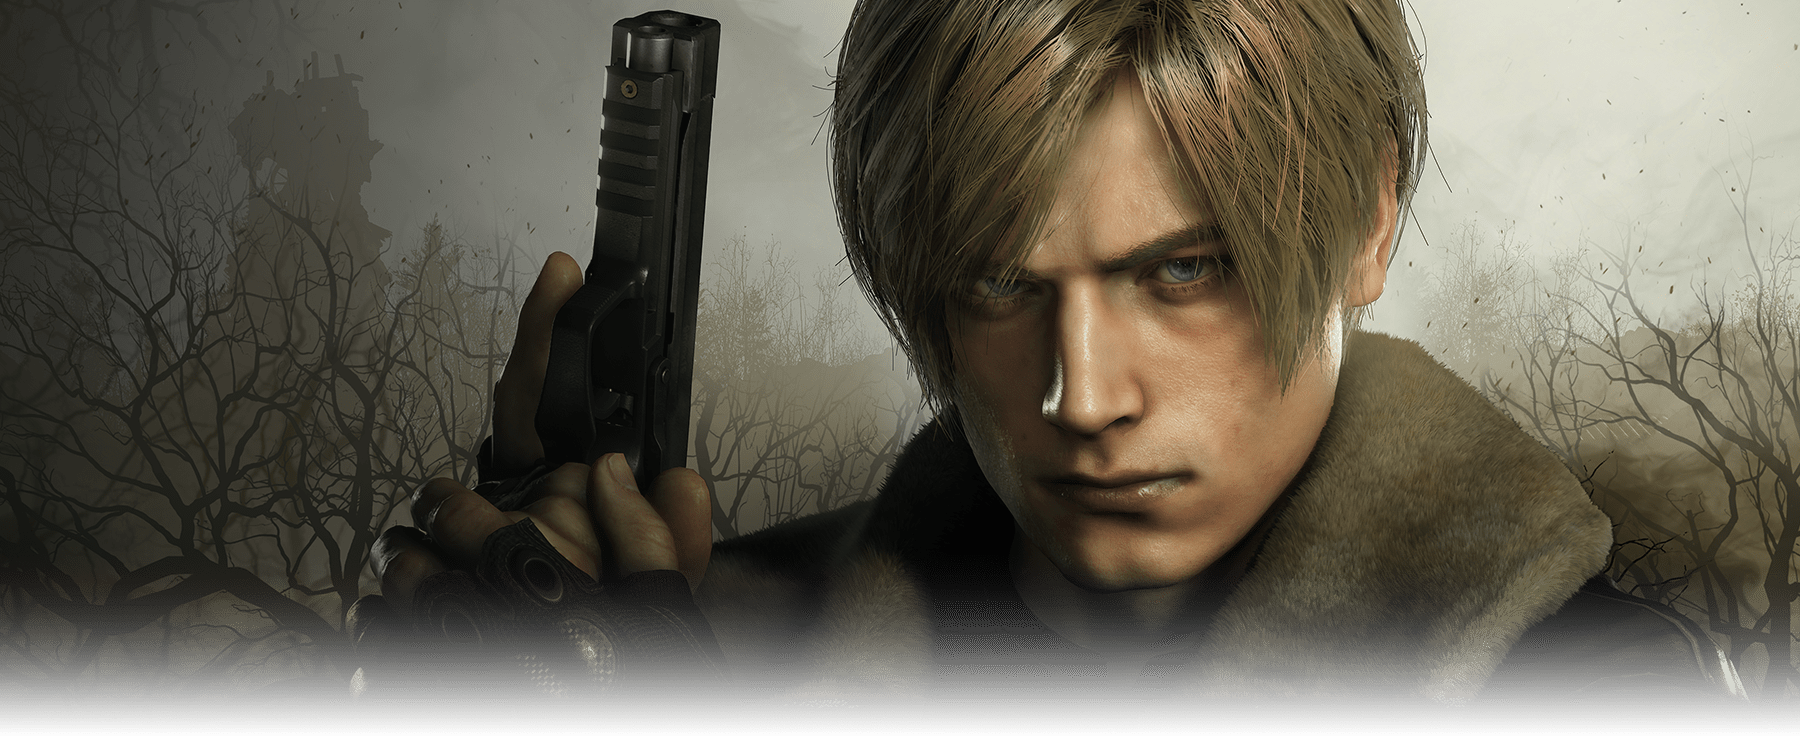 Modalità VR di Resident Evil 4